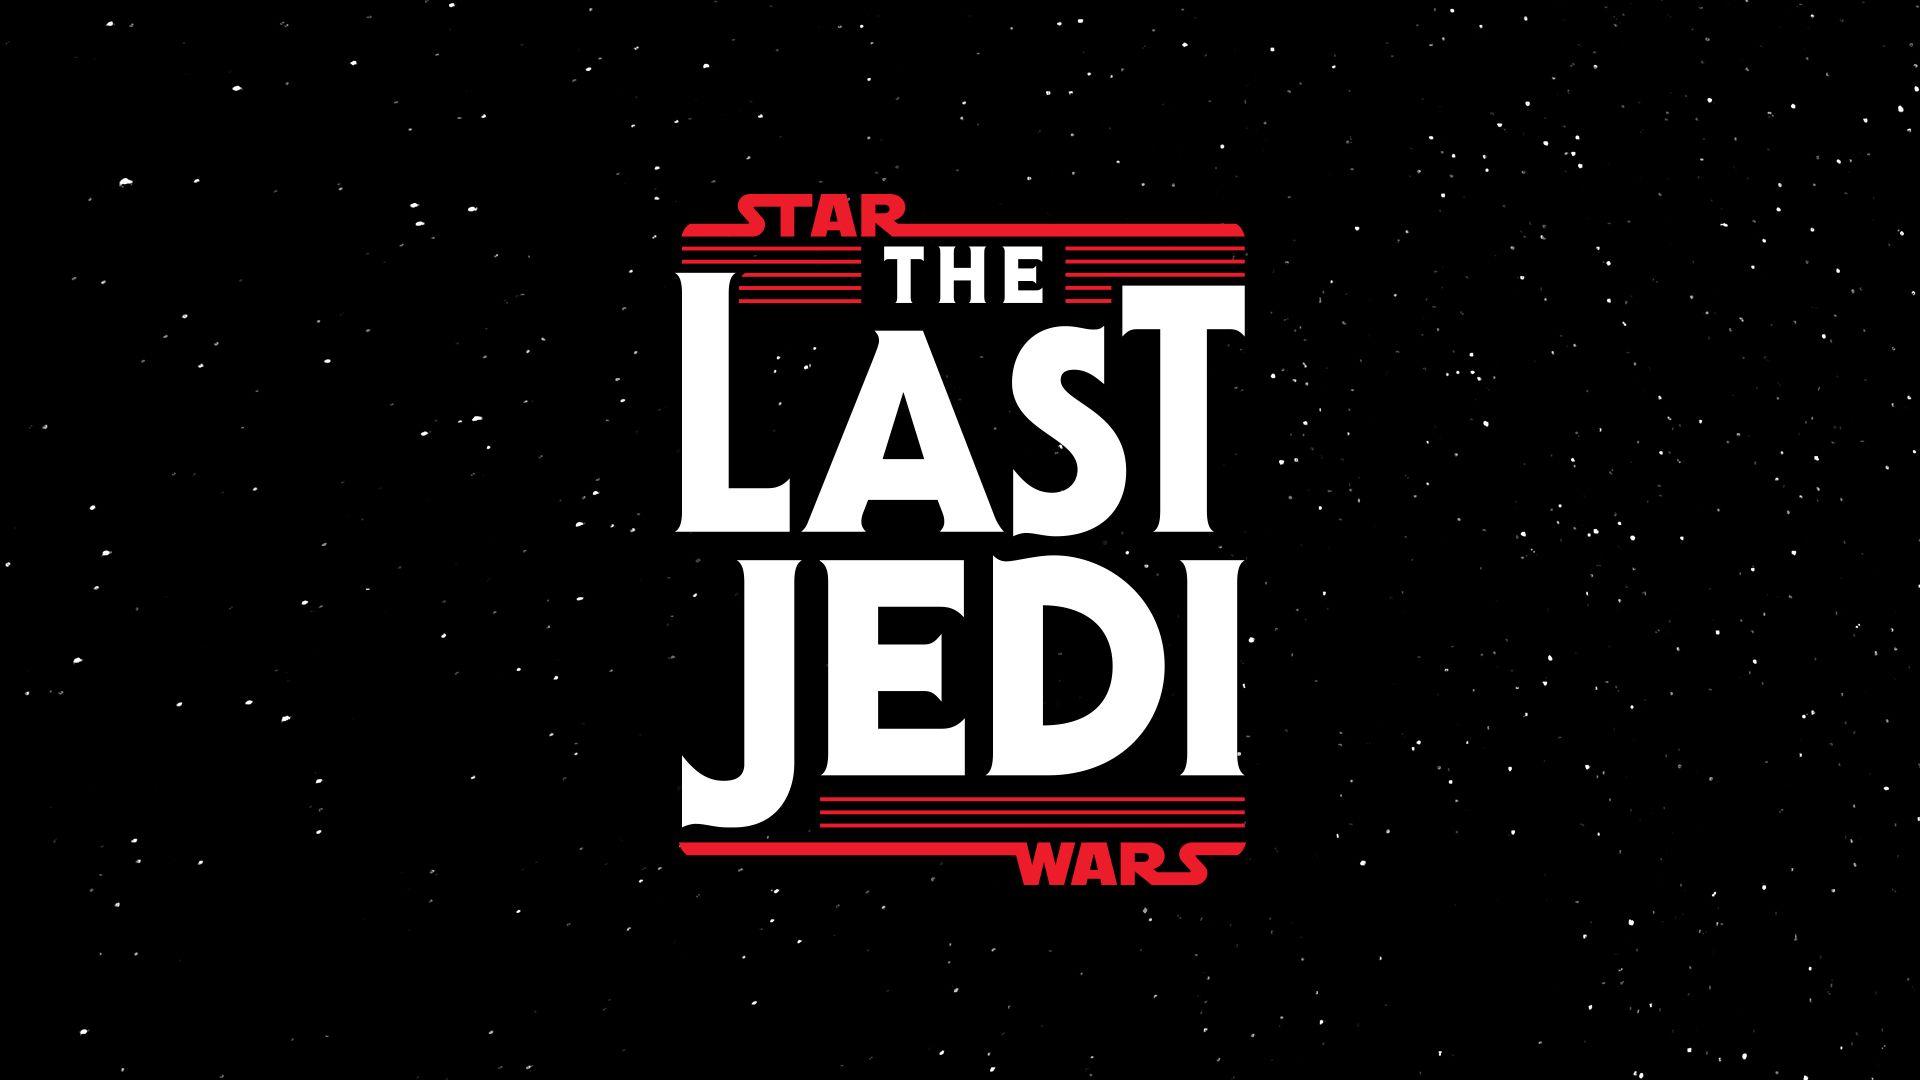 Star Wars: The Last Jedi ... Logo Designs on Behance